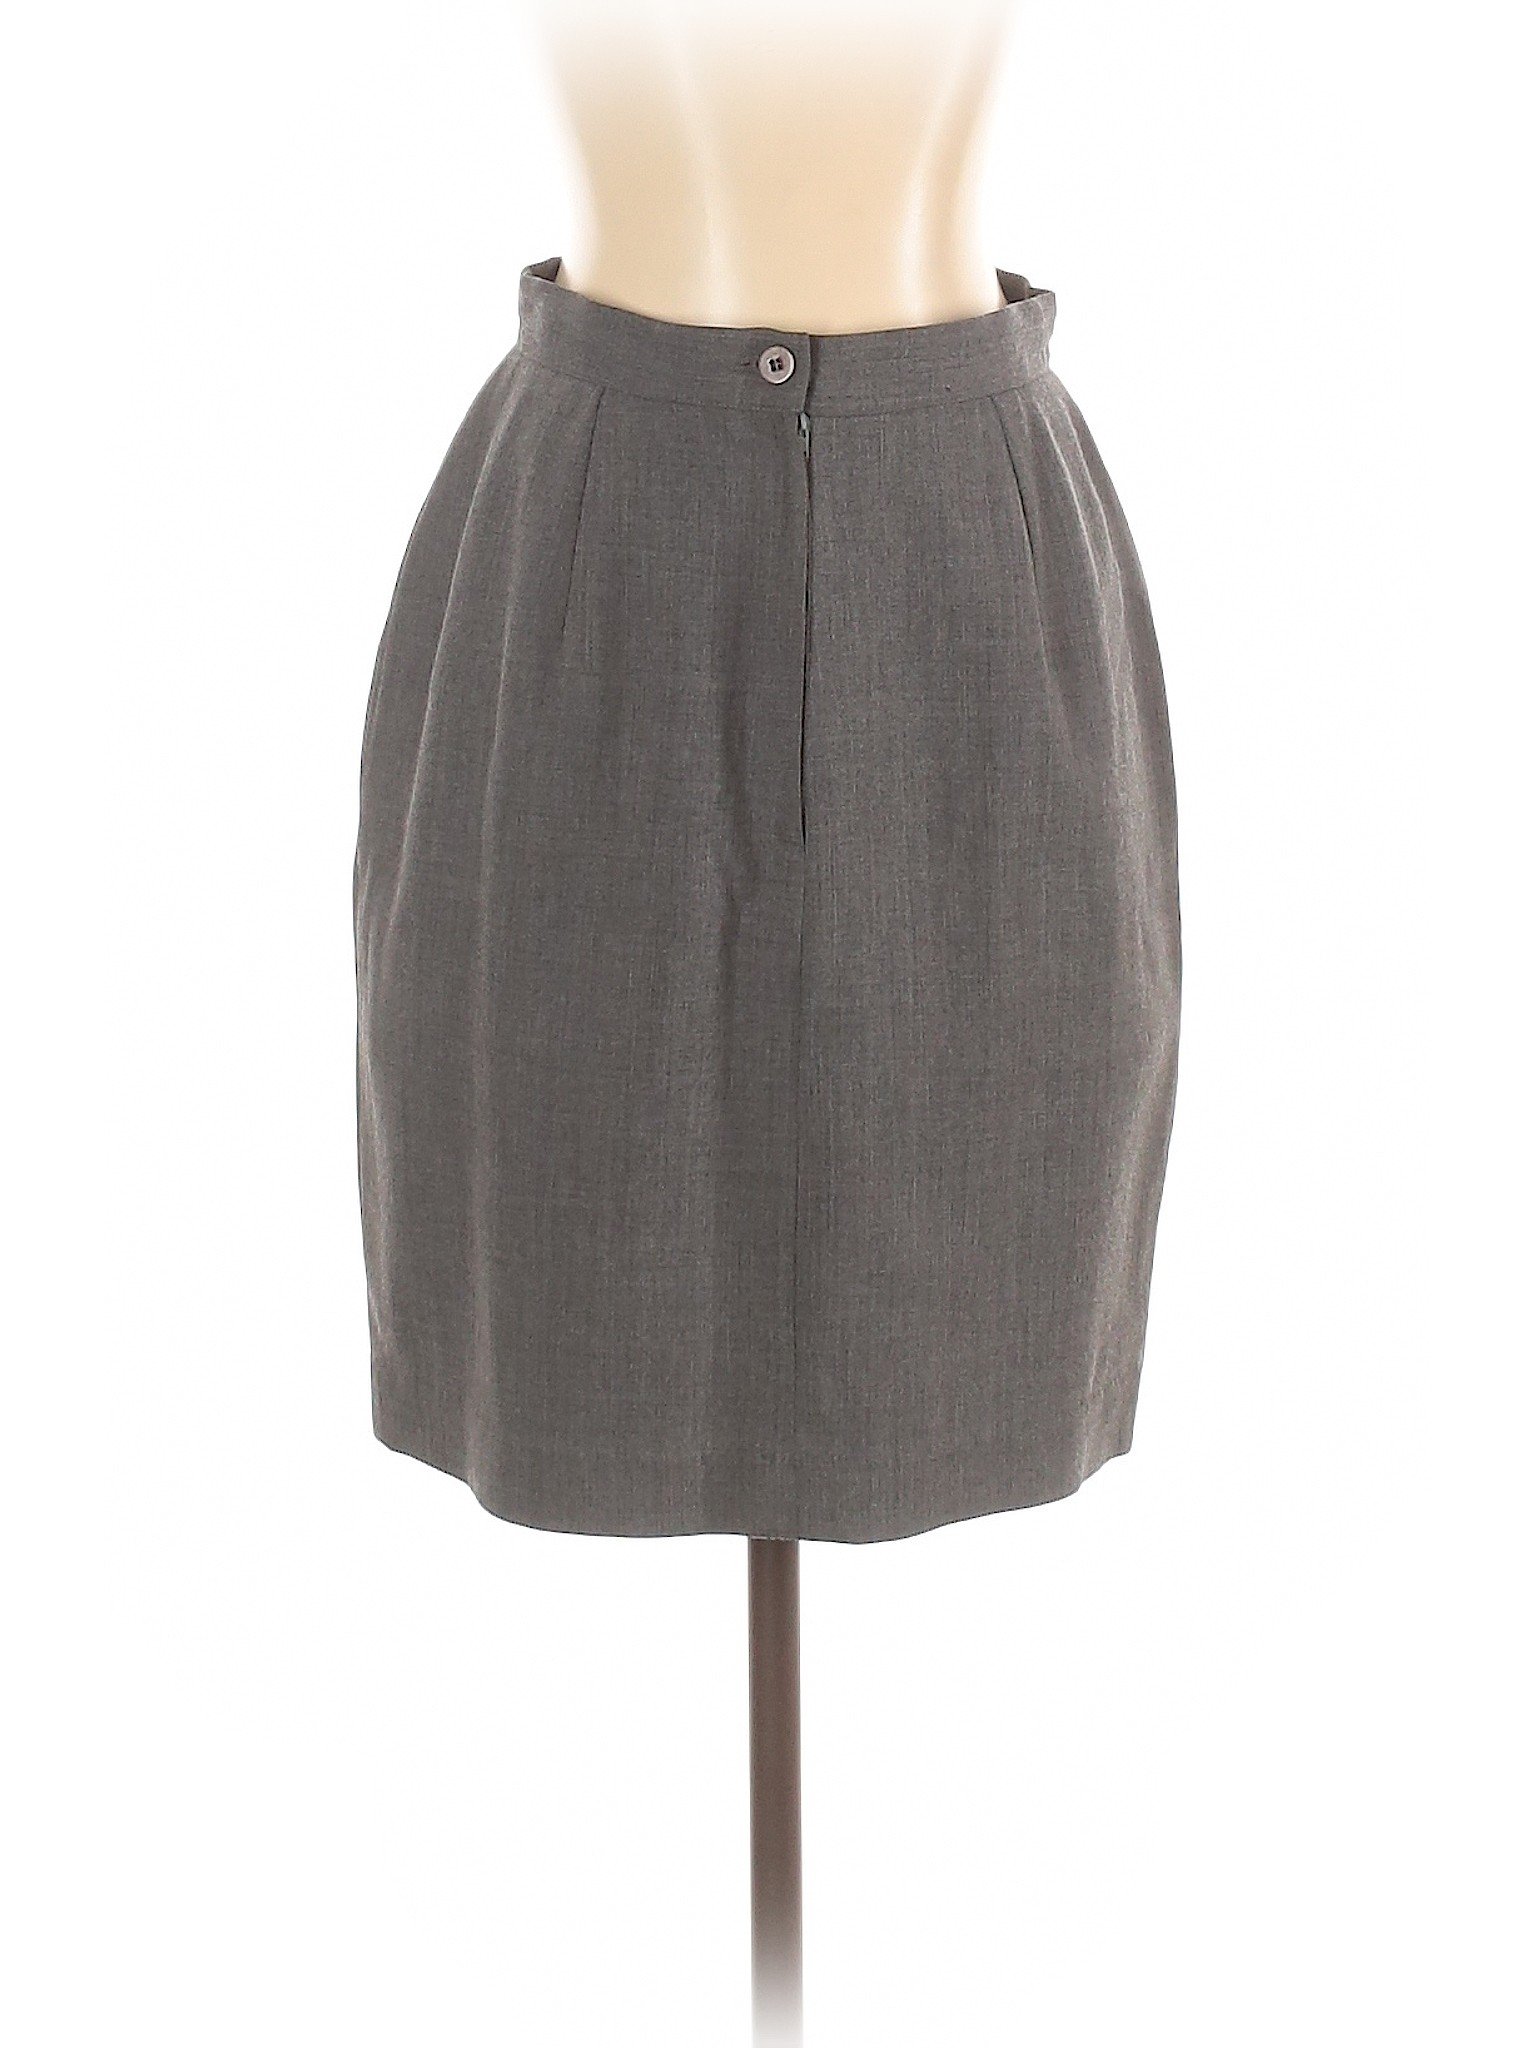 Giorgio Armani Women Gray Casual Skirt 6 | eBay